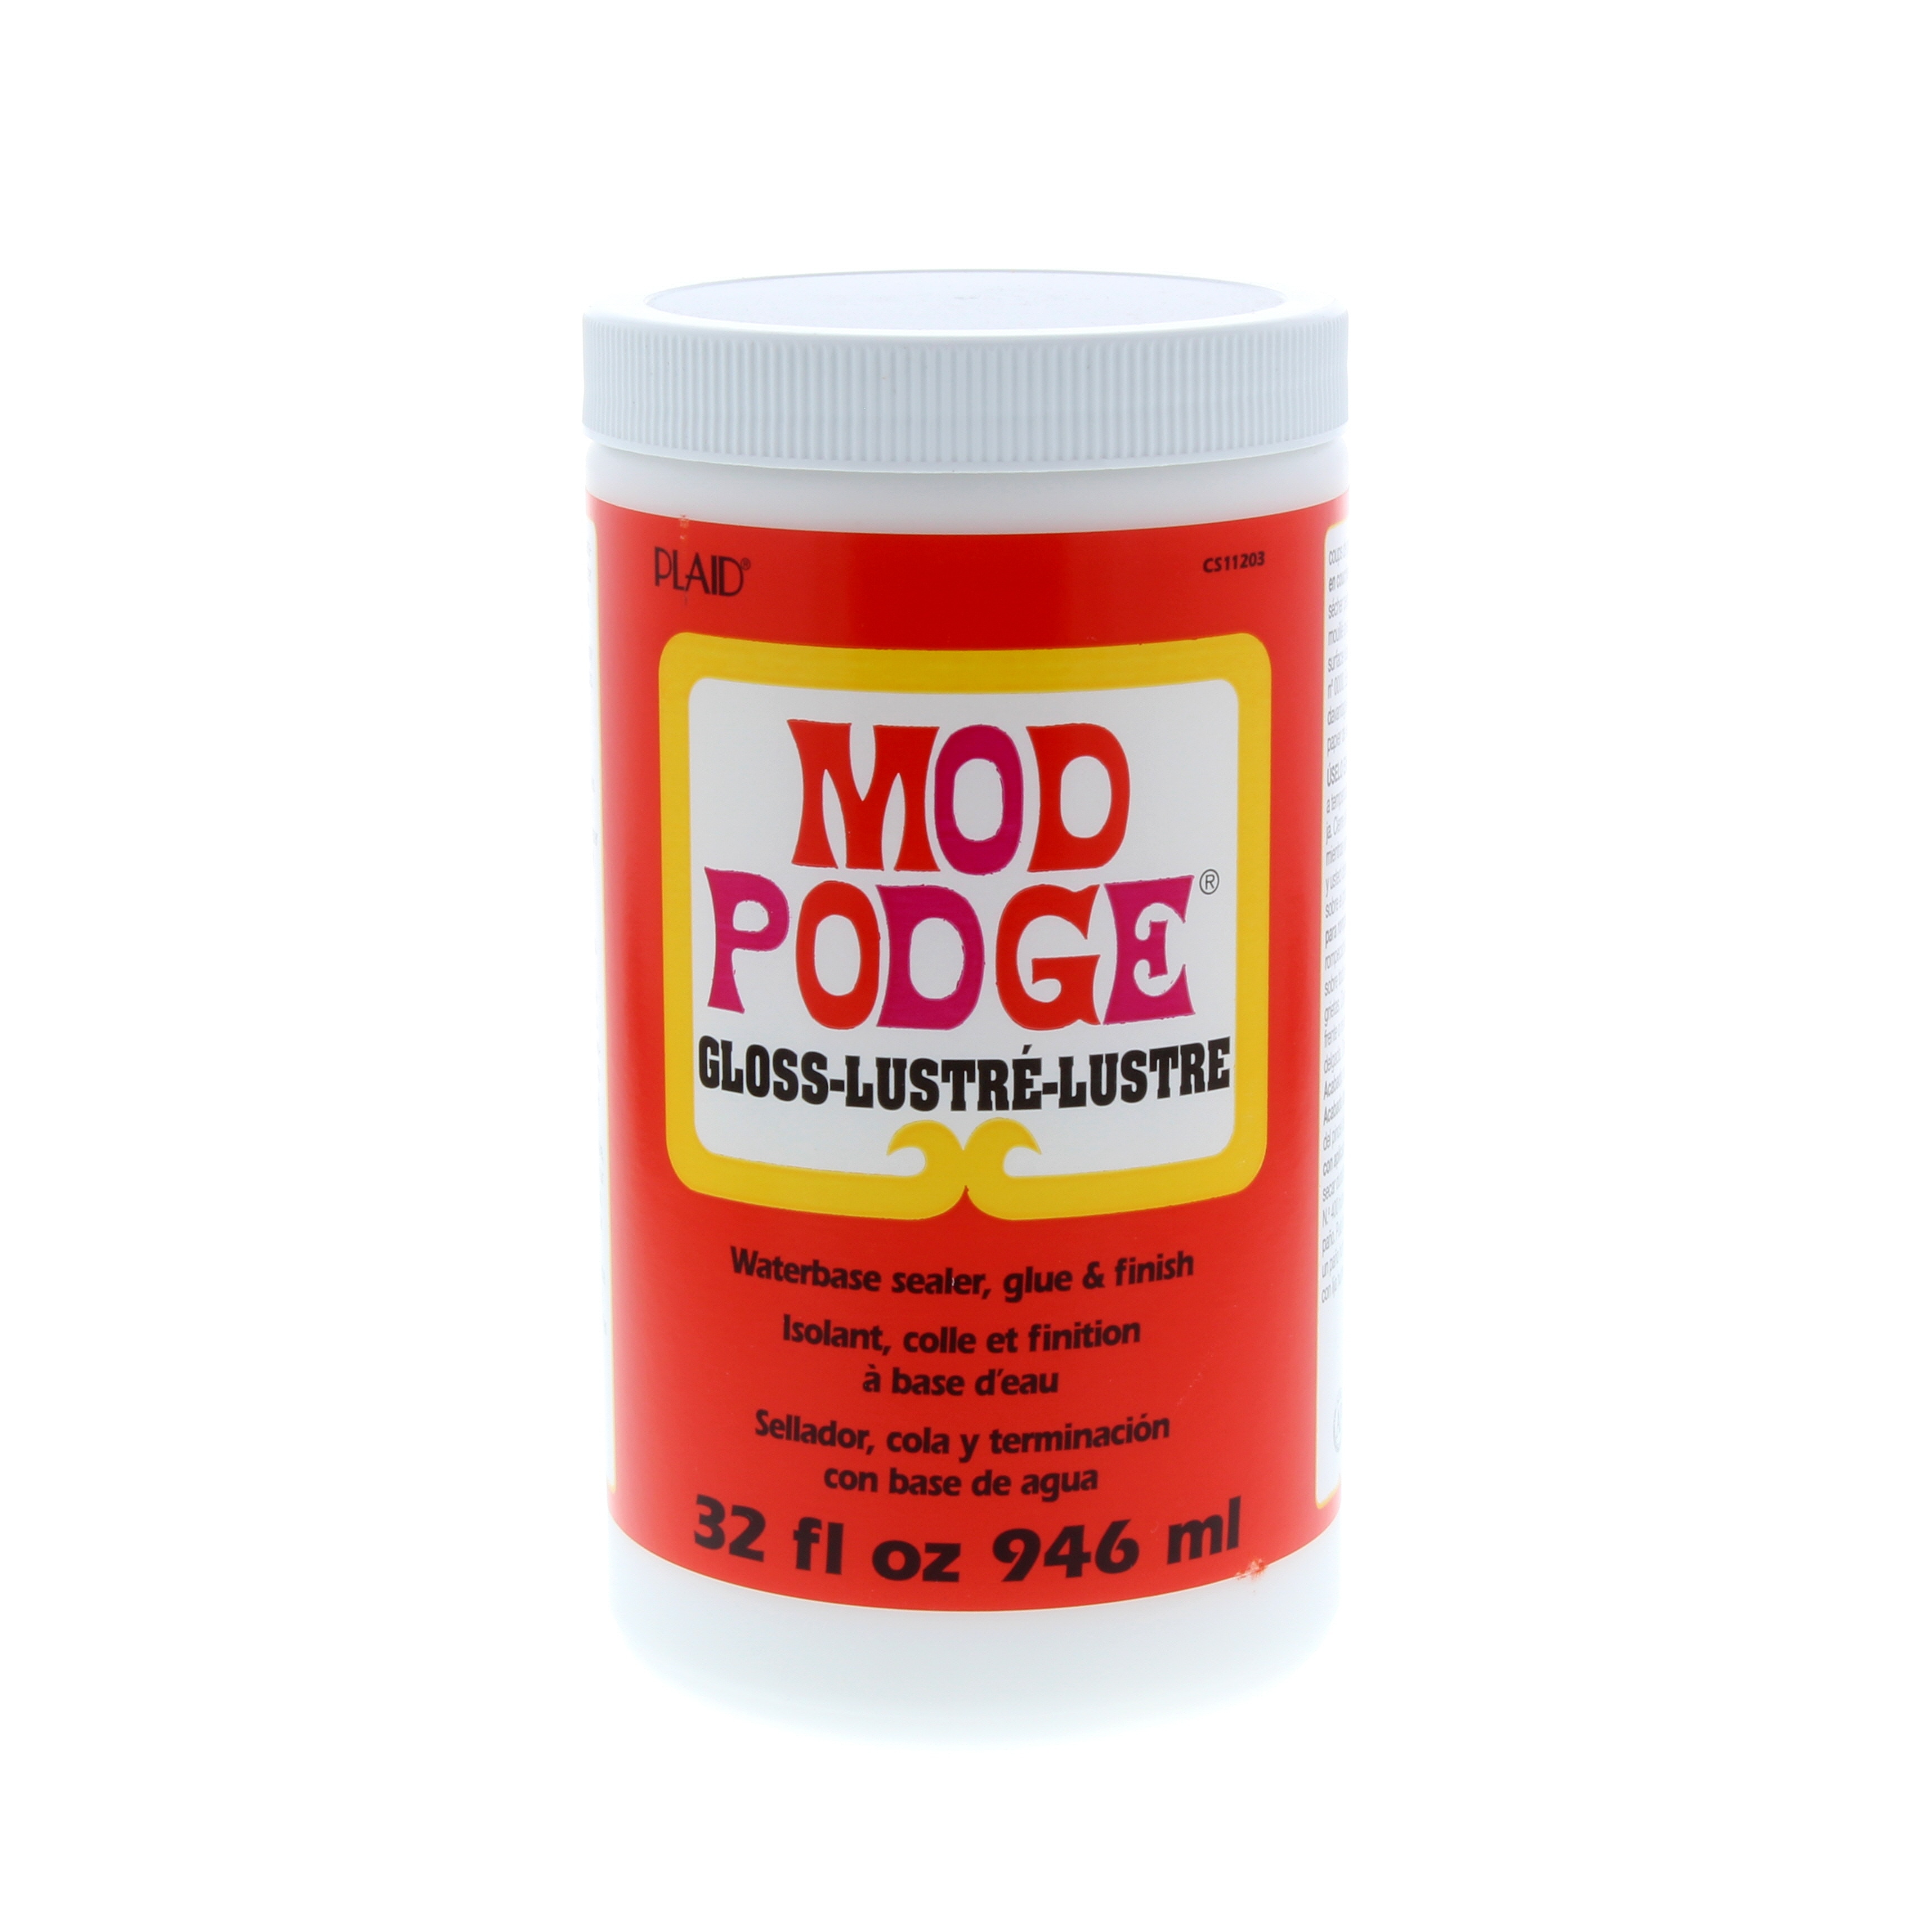 Mod Podge Spray Acrylic Sealer Glossy 2-Pack, Clear Coating Matte Paint  Sealer Spray, Spray Can Sprayer Handle 